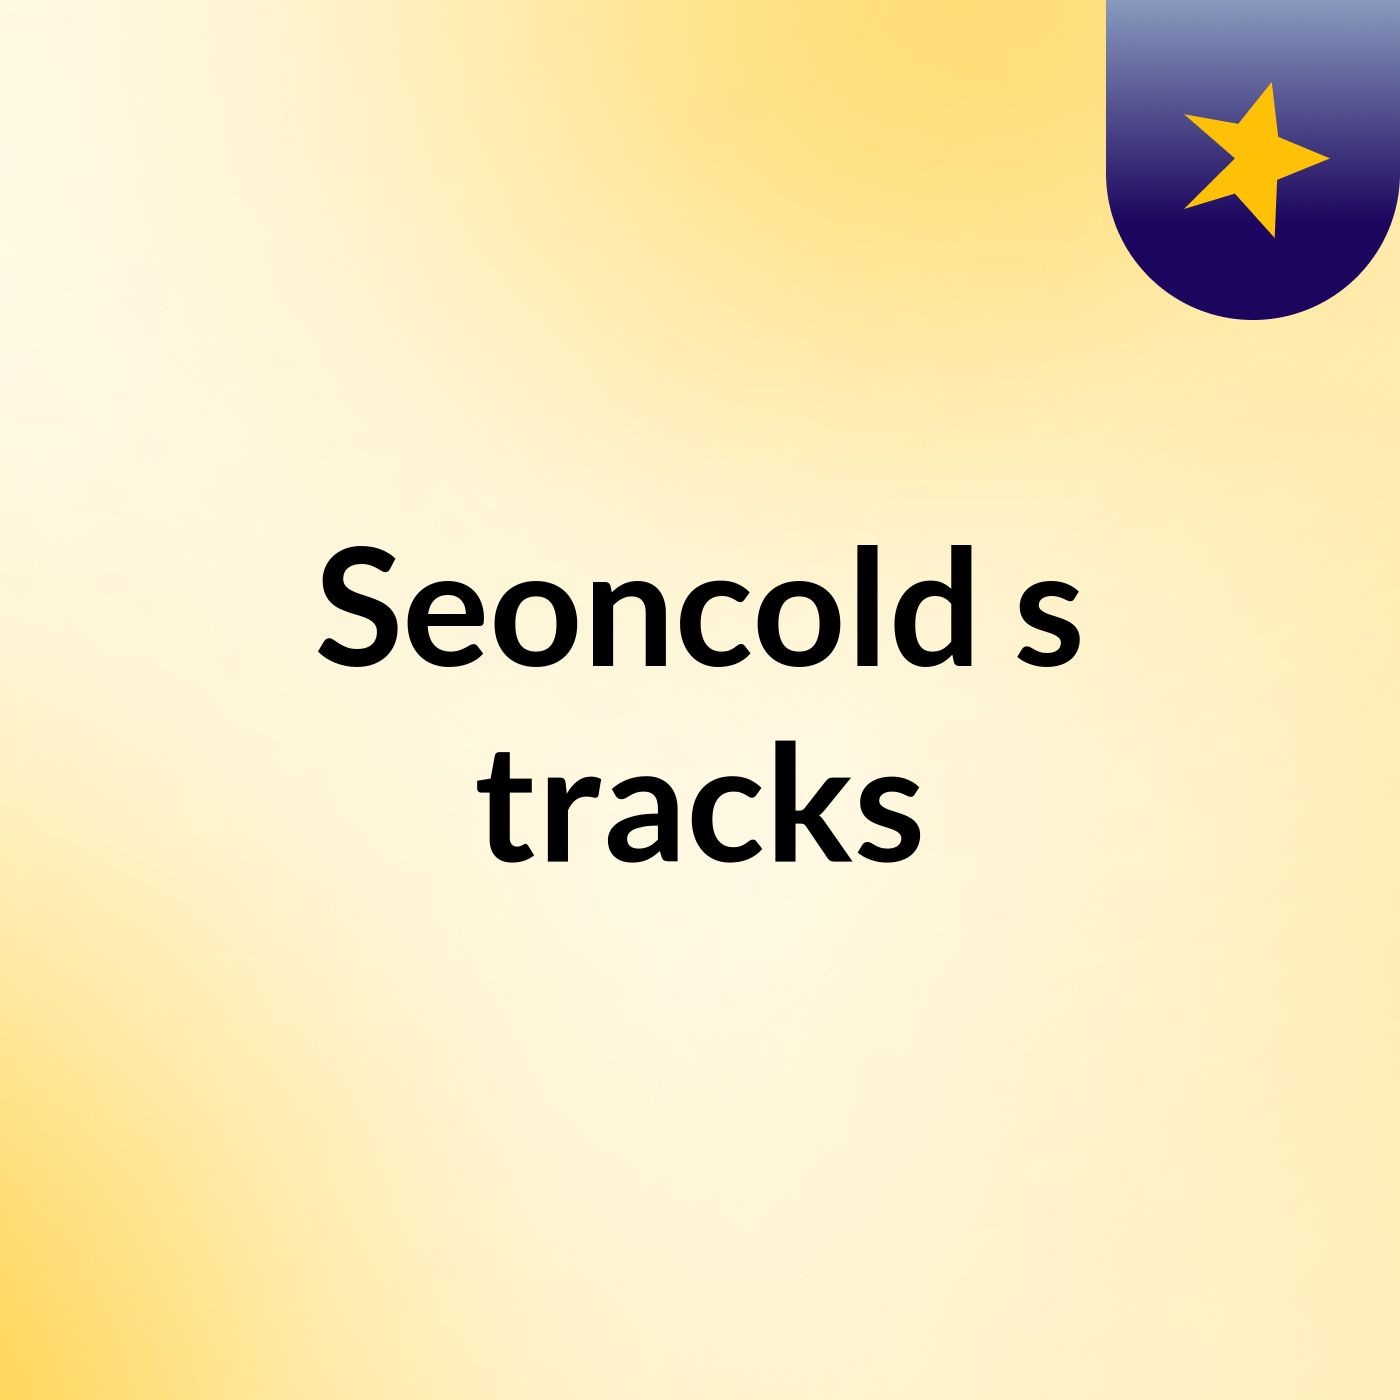 Seoncold's tracks